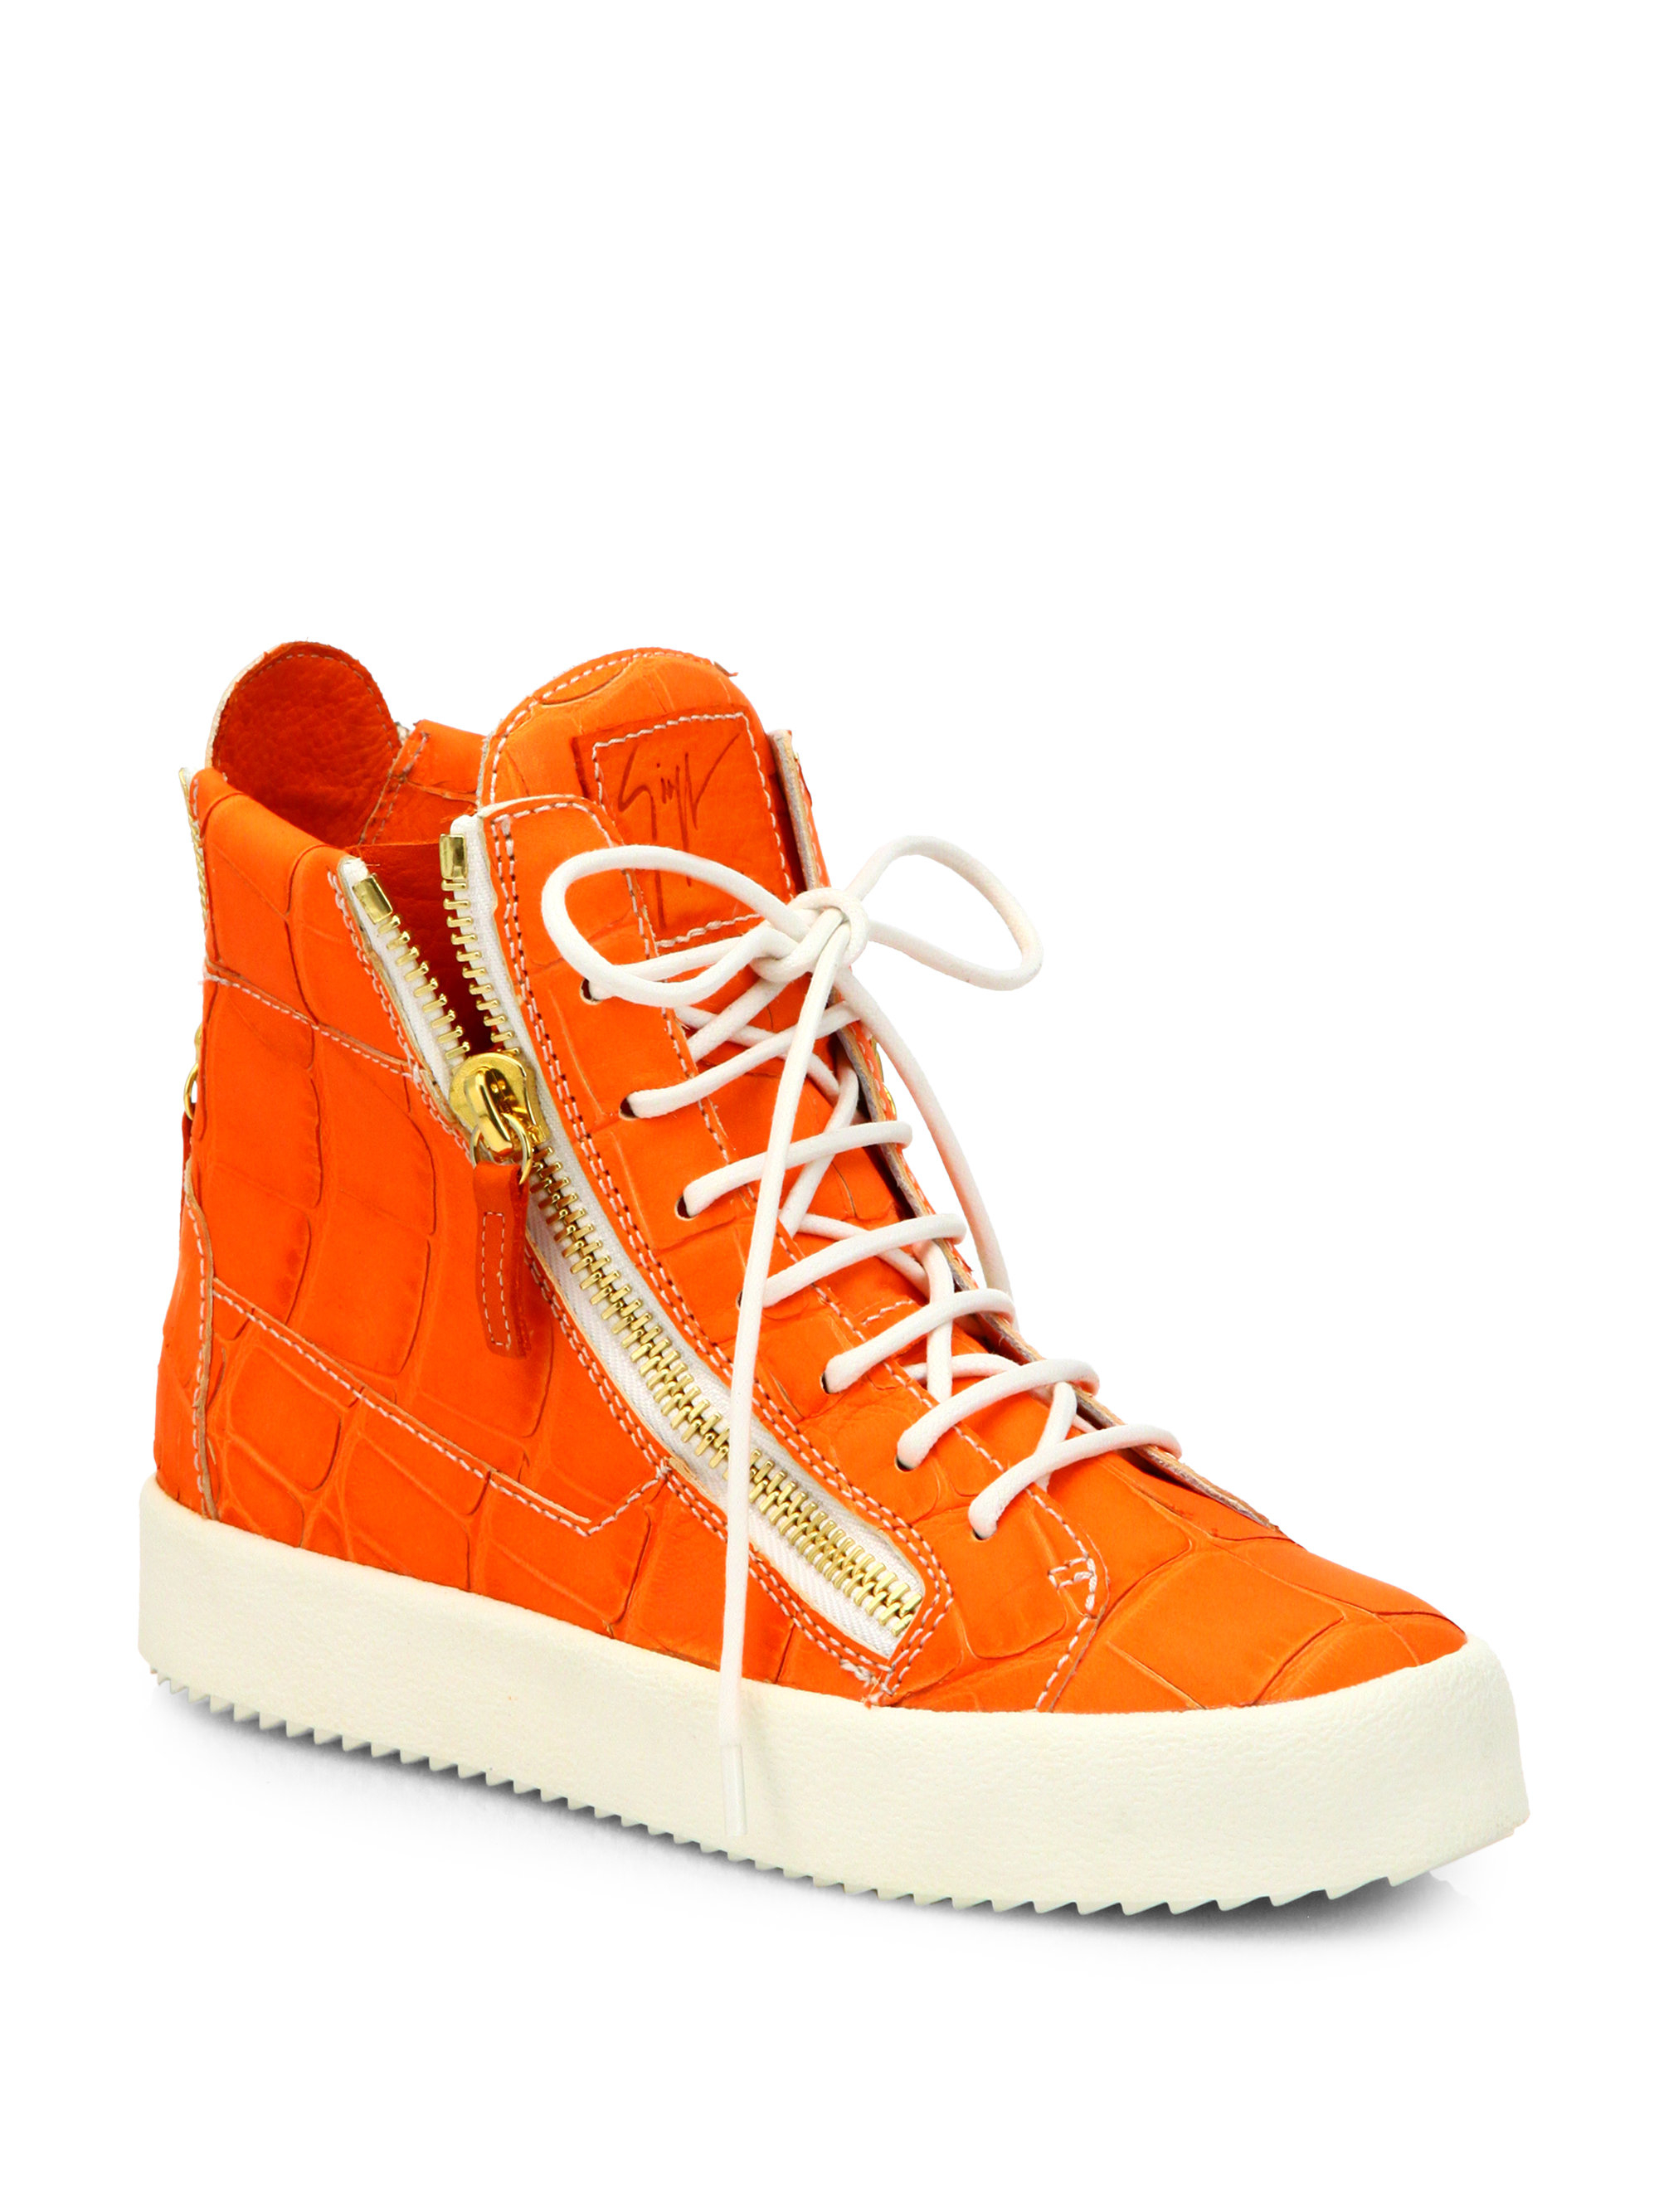 giuseppe zanotti orange sneakers